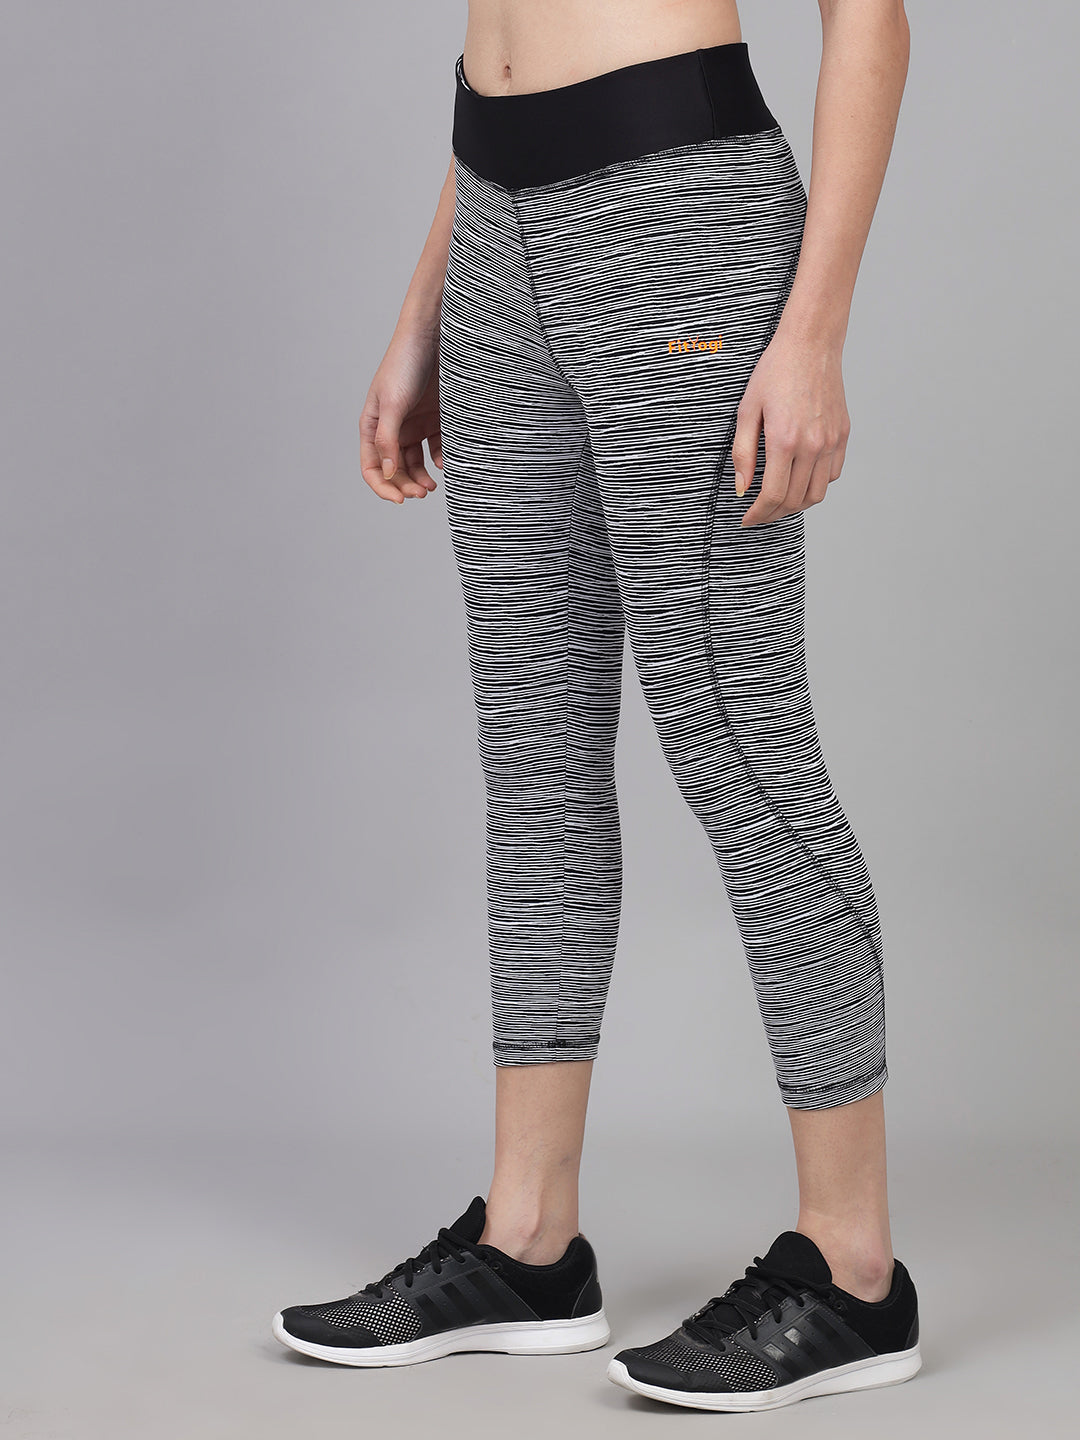 Zebra Print High Waist Gym Wear/Yoga Wear Capri